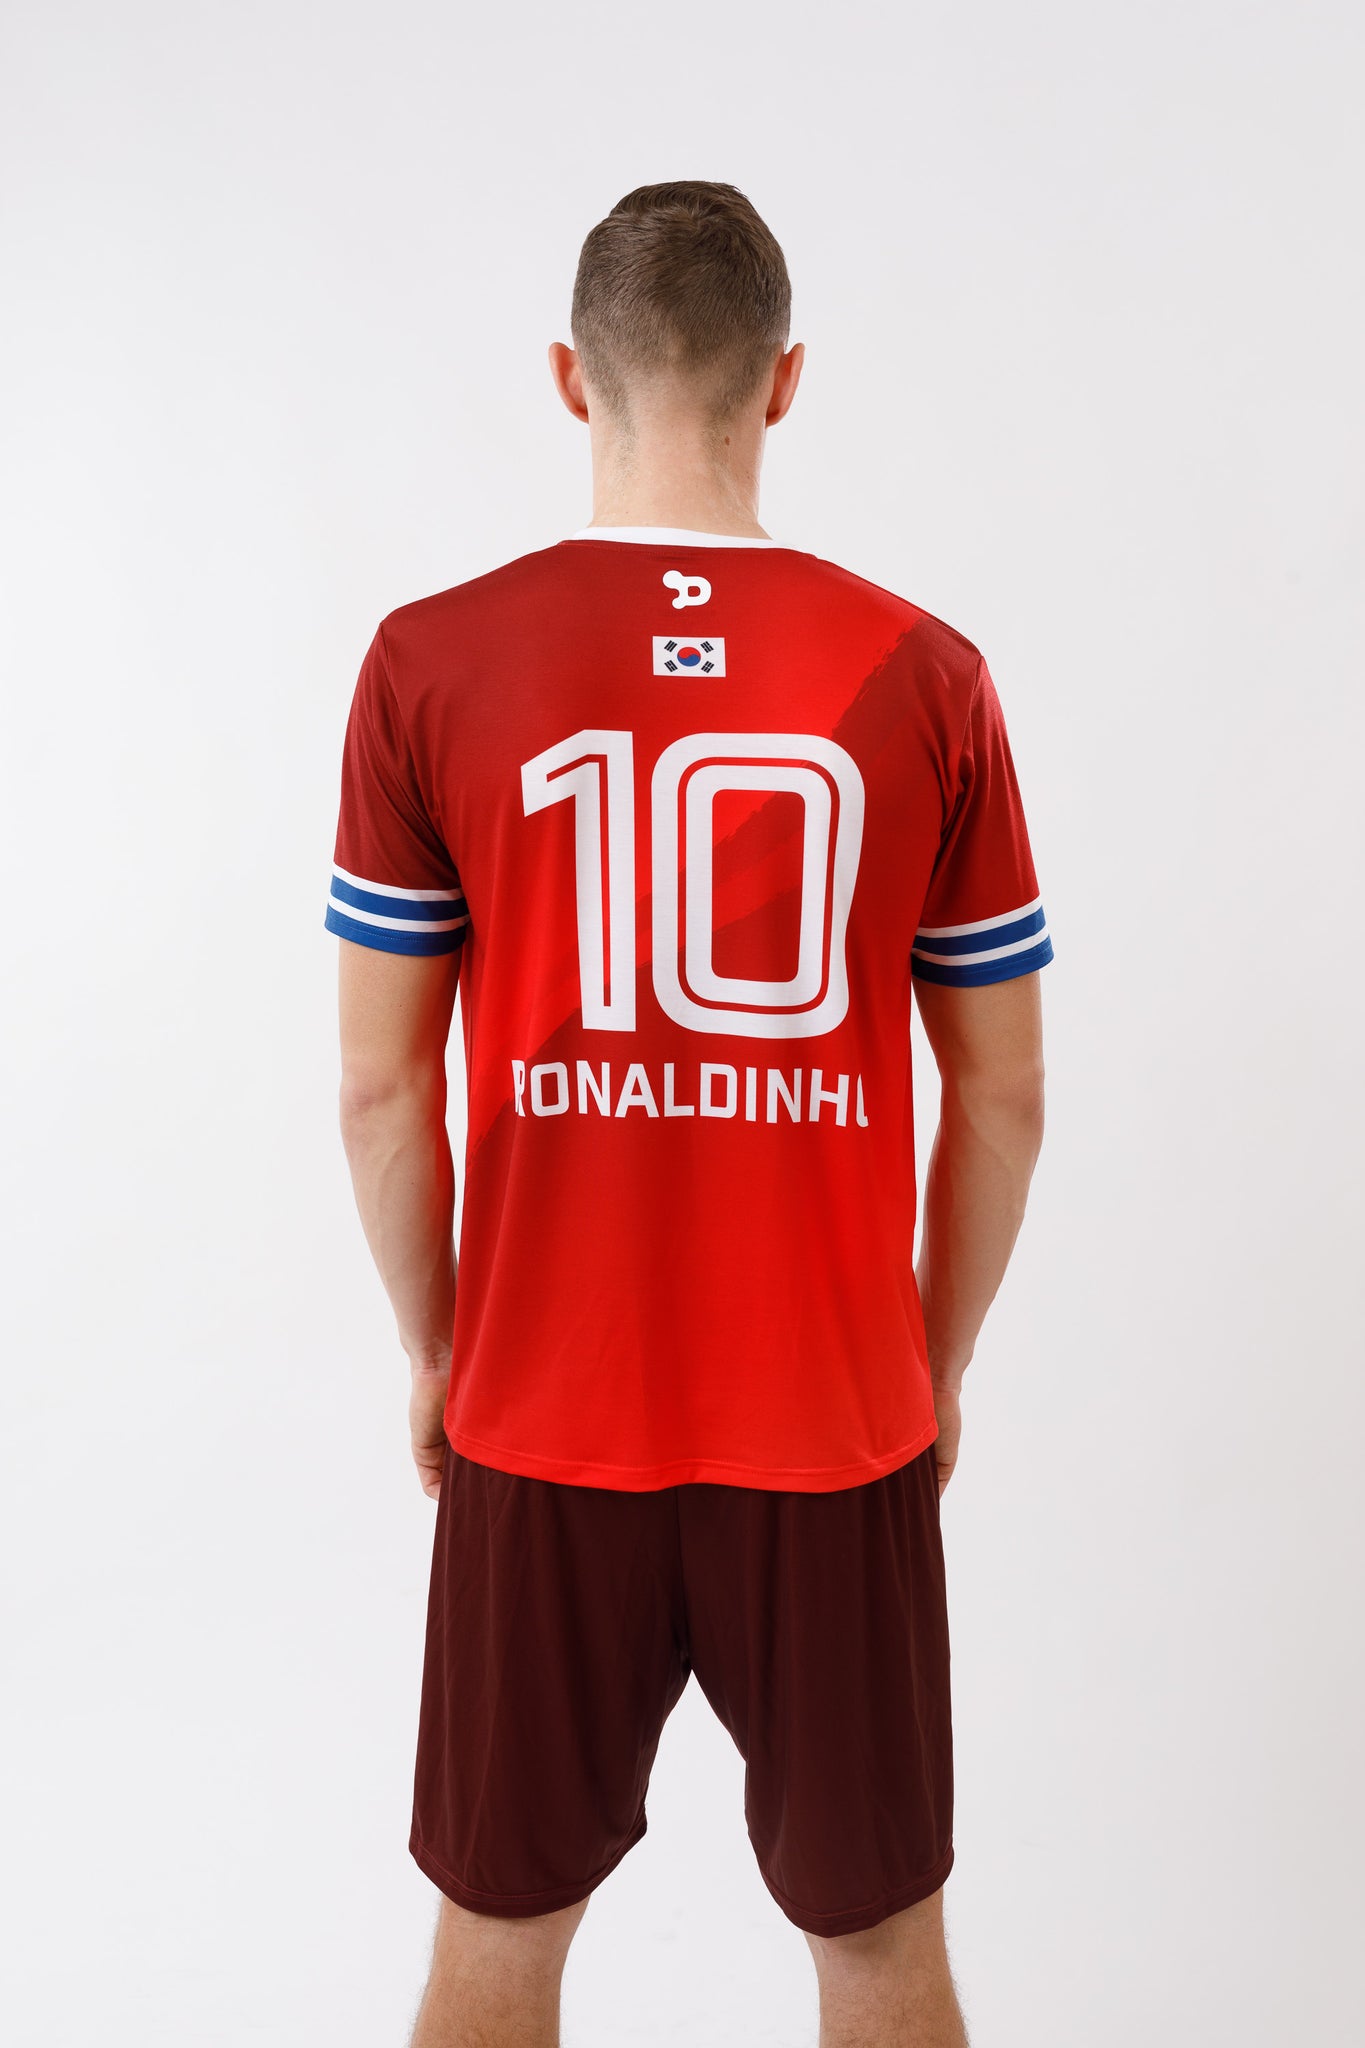 Ronaldinho Korea Republic Jersey/Camisa